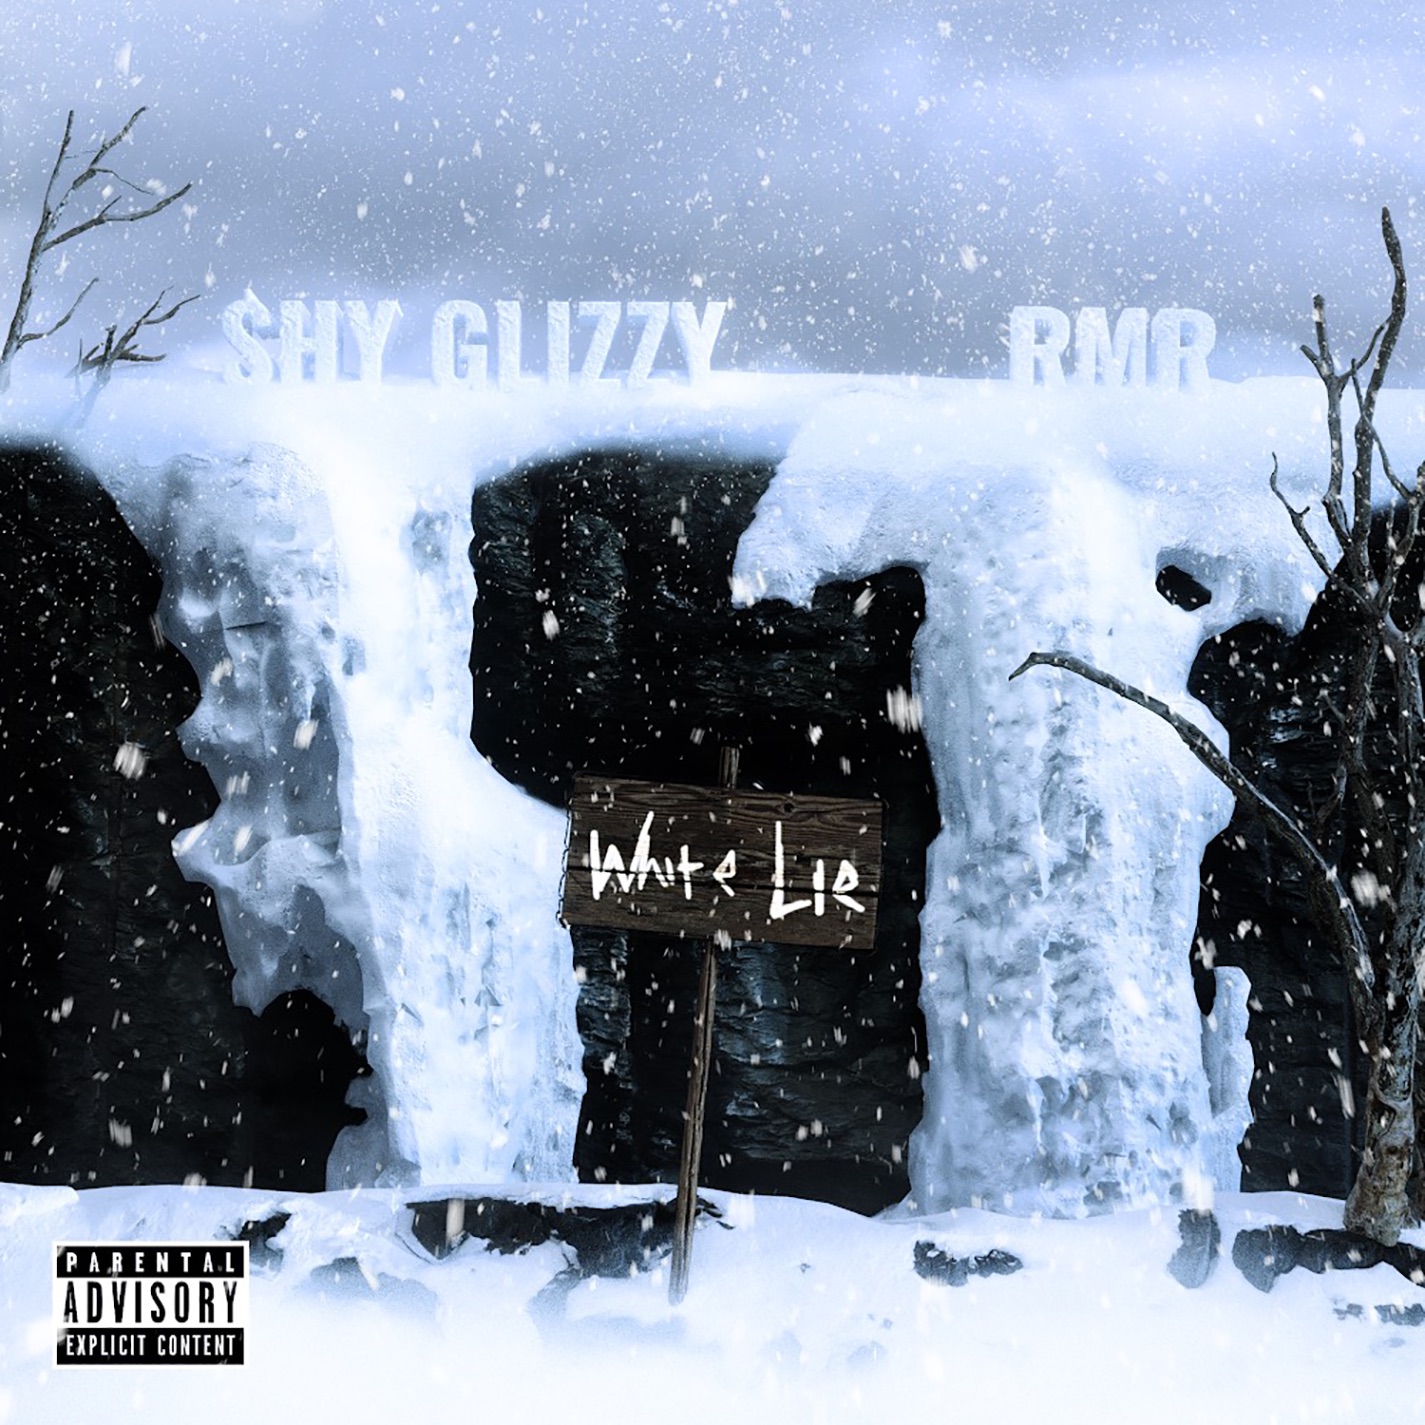 Shy Glizzy - White Lie (feat. RMR) - Single